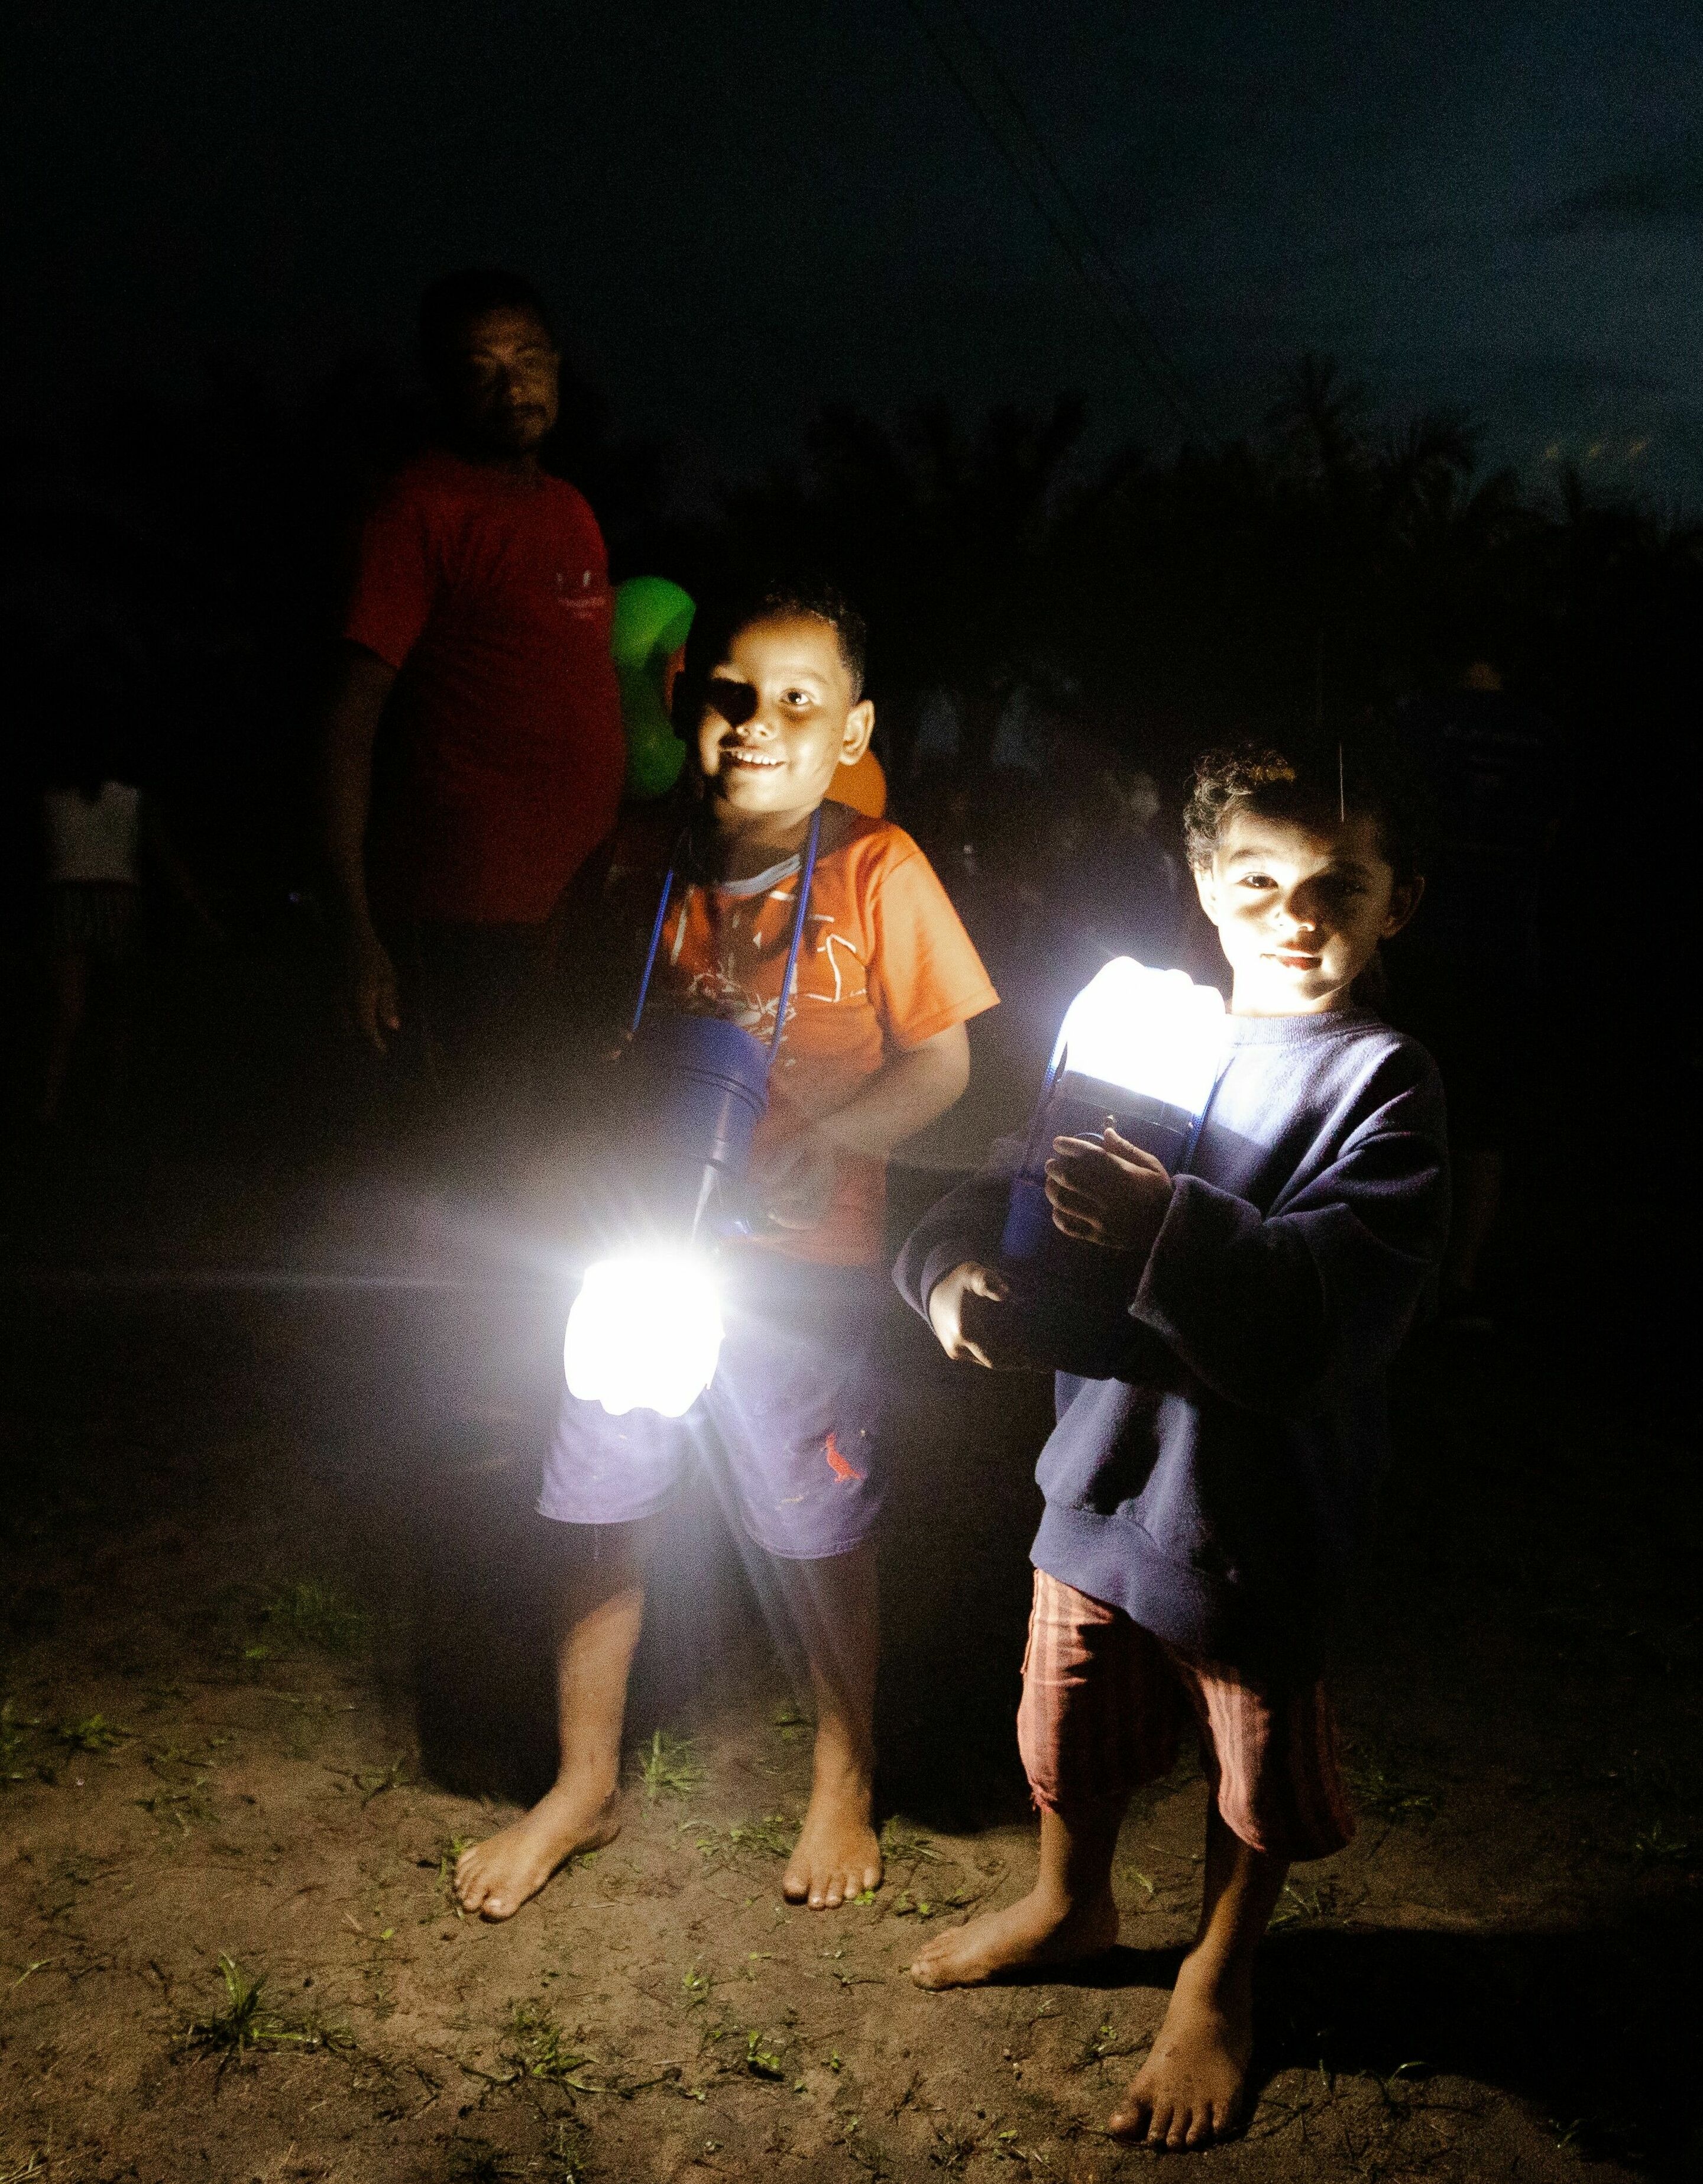 Solar light for Brazil: Audi Environmental Foundation, Audi do Brasil and Litro de Luz Brasil install light masts and solar lamps in several Amazonian communities